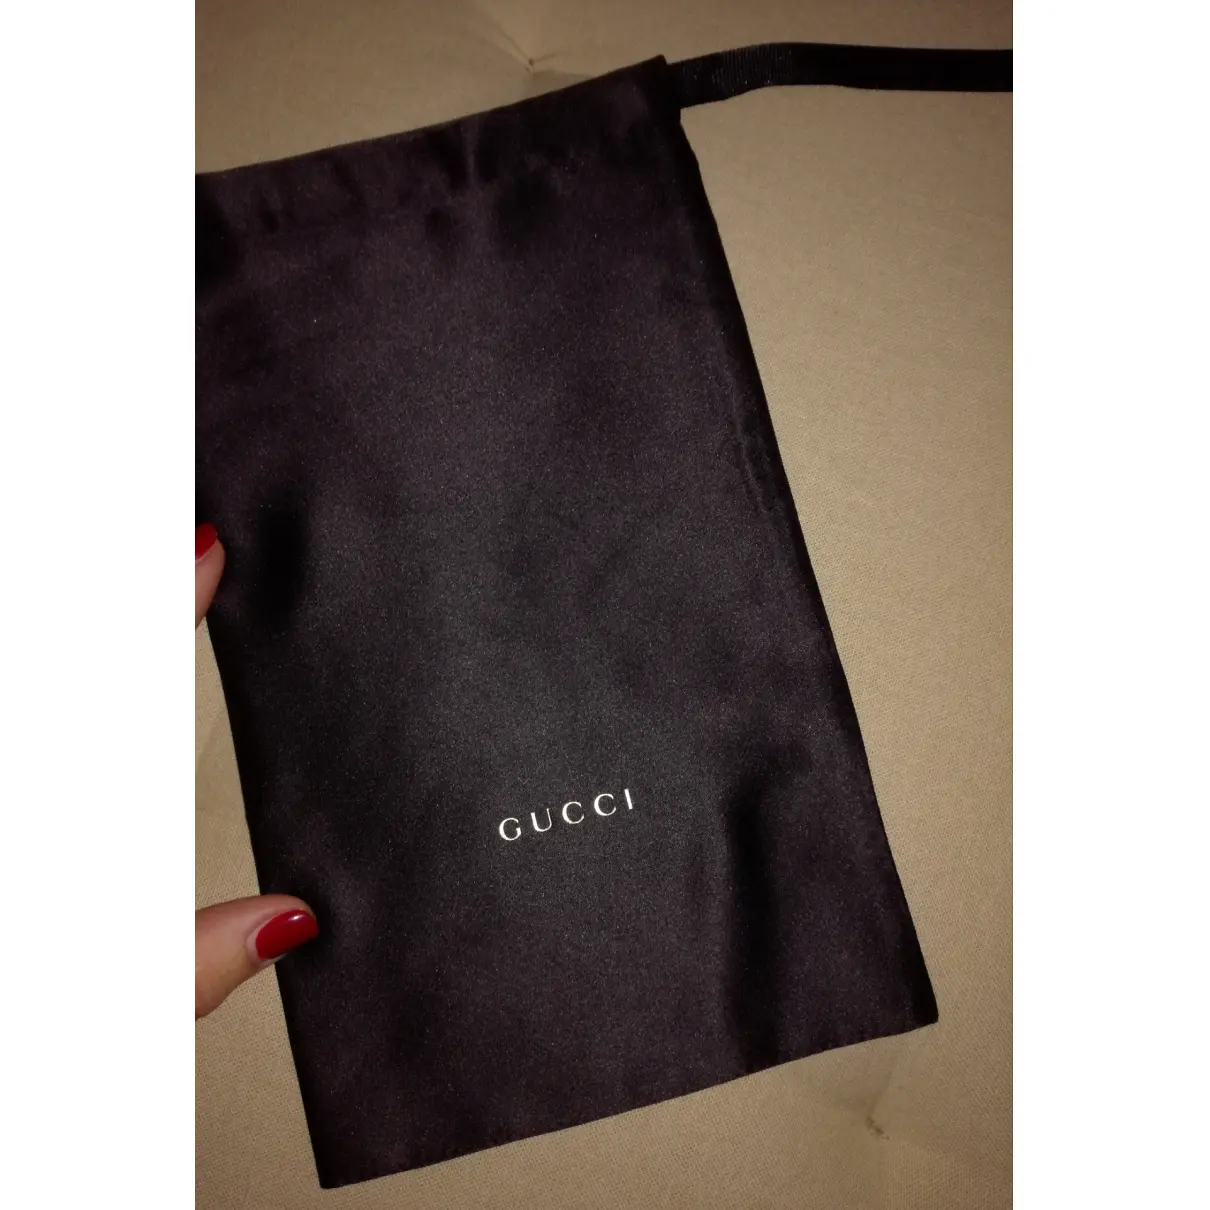 Buy Gucci Cloth clutch bag online